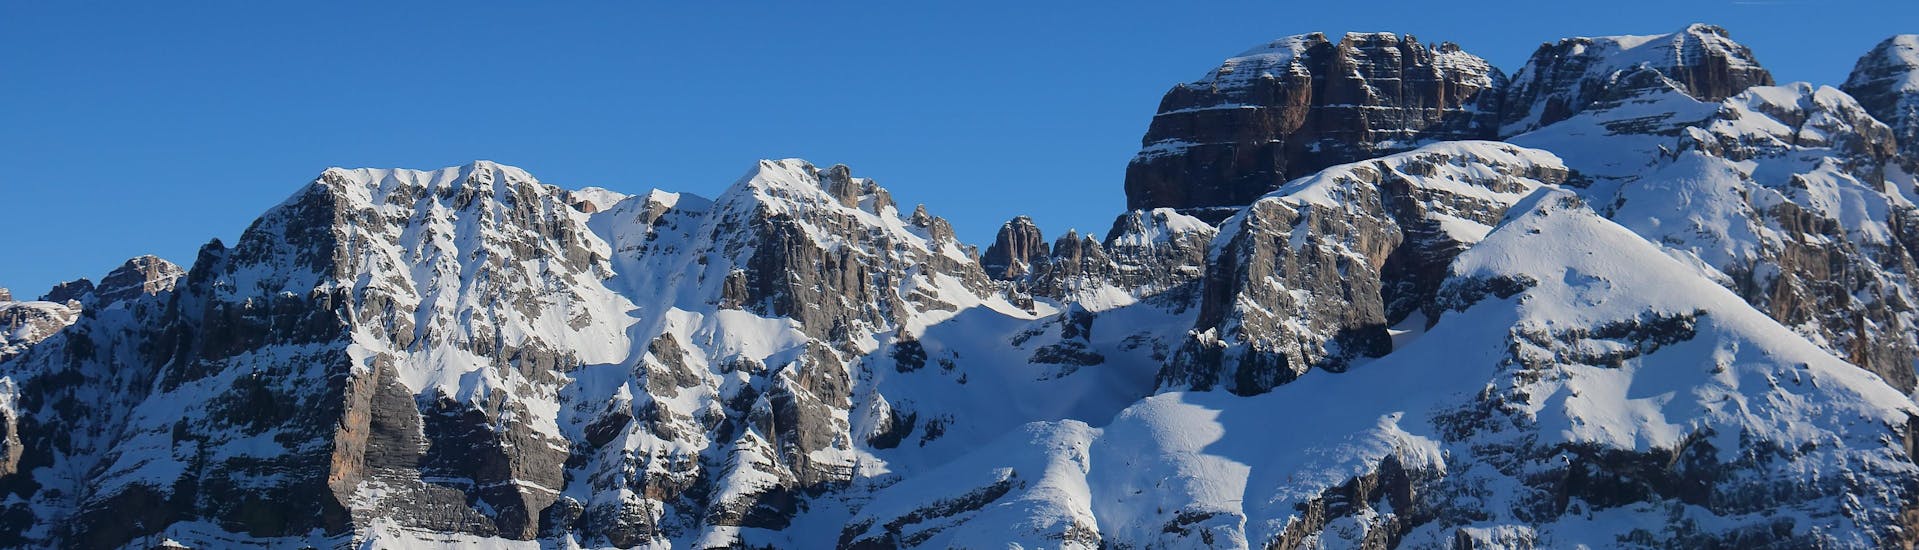 View of the alpine landscape of the ski resort Pinzolo, where local ski schools offer their ski lessons.